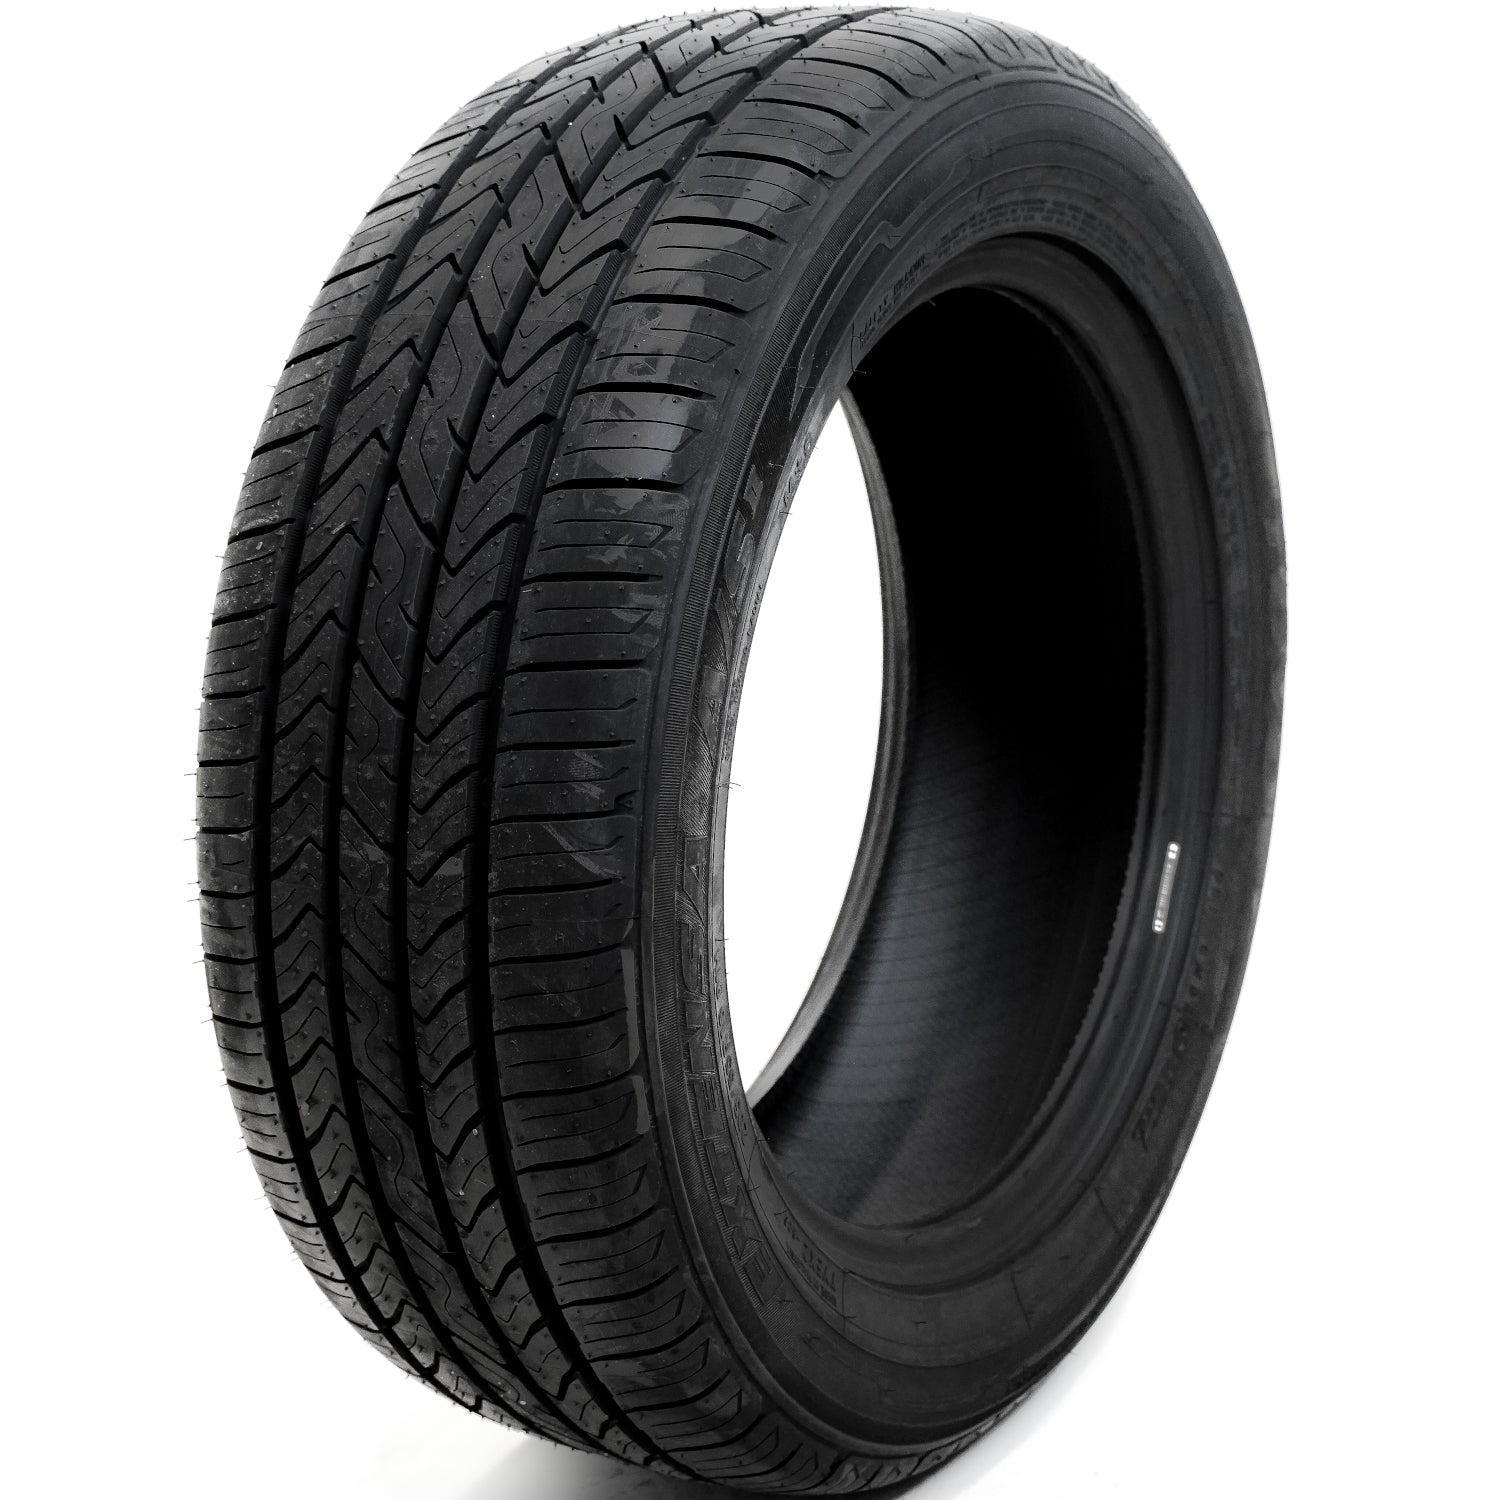 TOYO TIRES EXTENSA A/S II P235/75R15 105T (28.9X9.3R 15) Tires